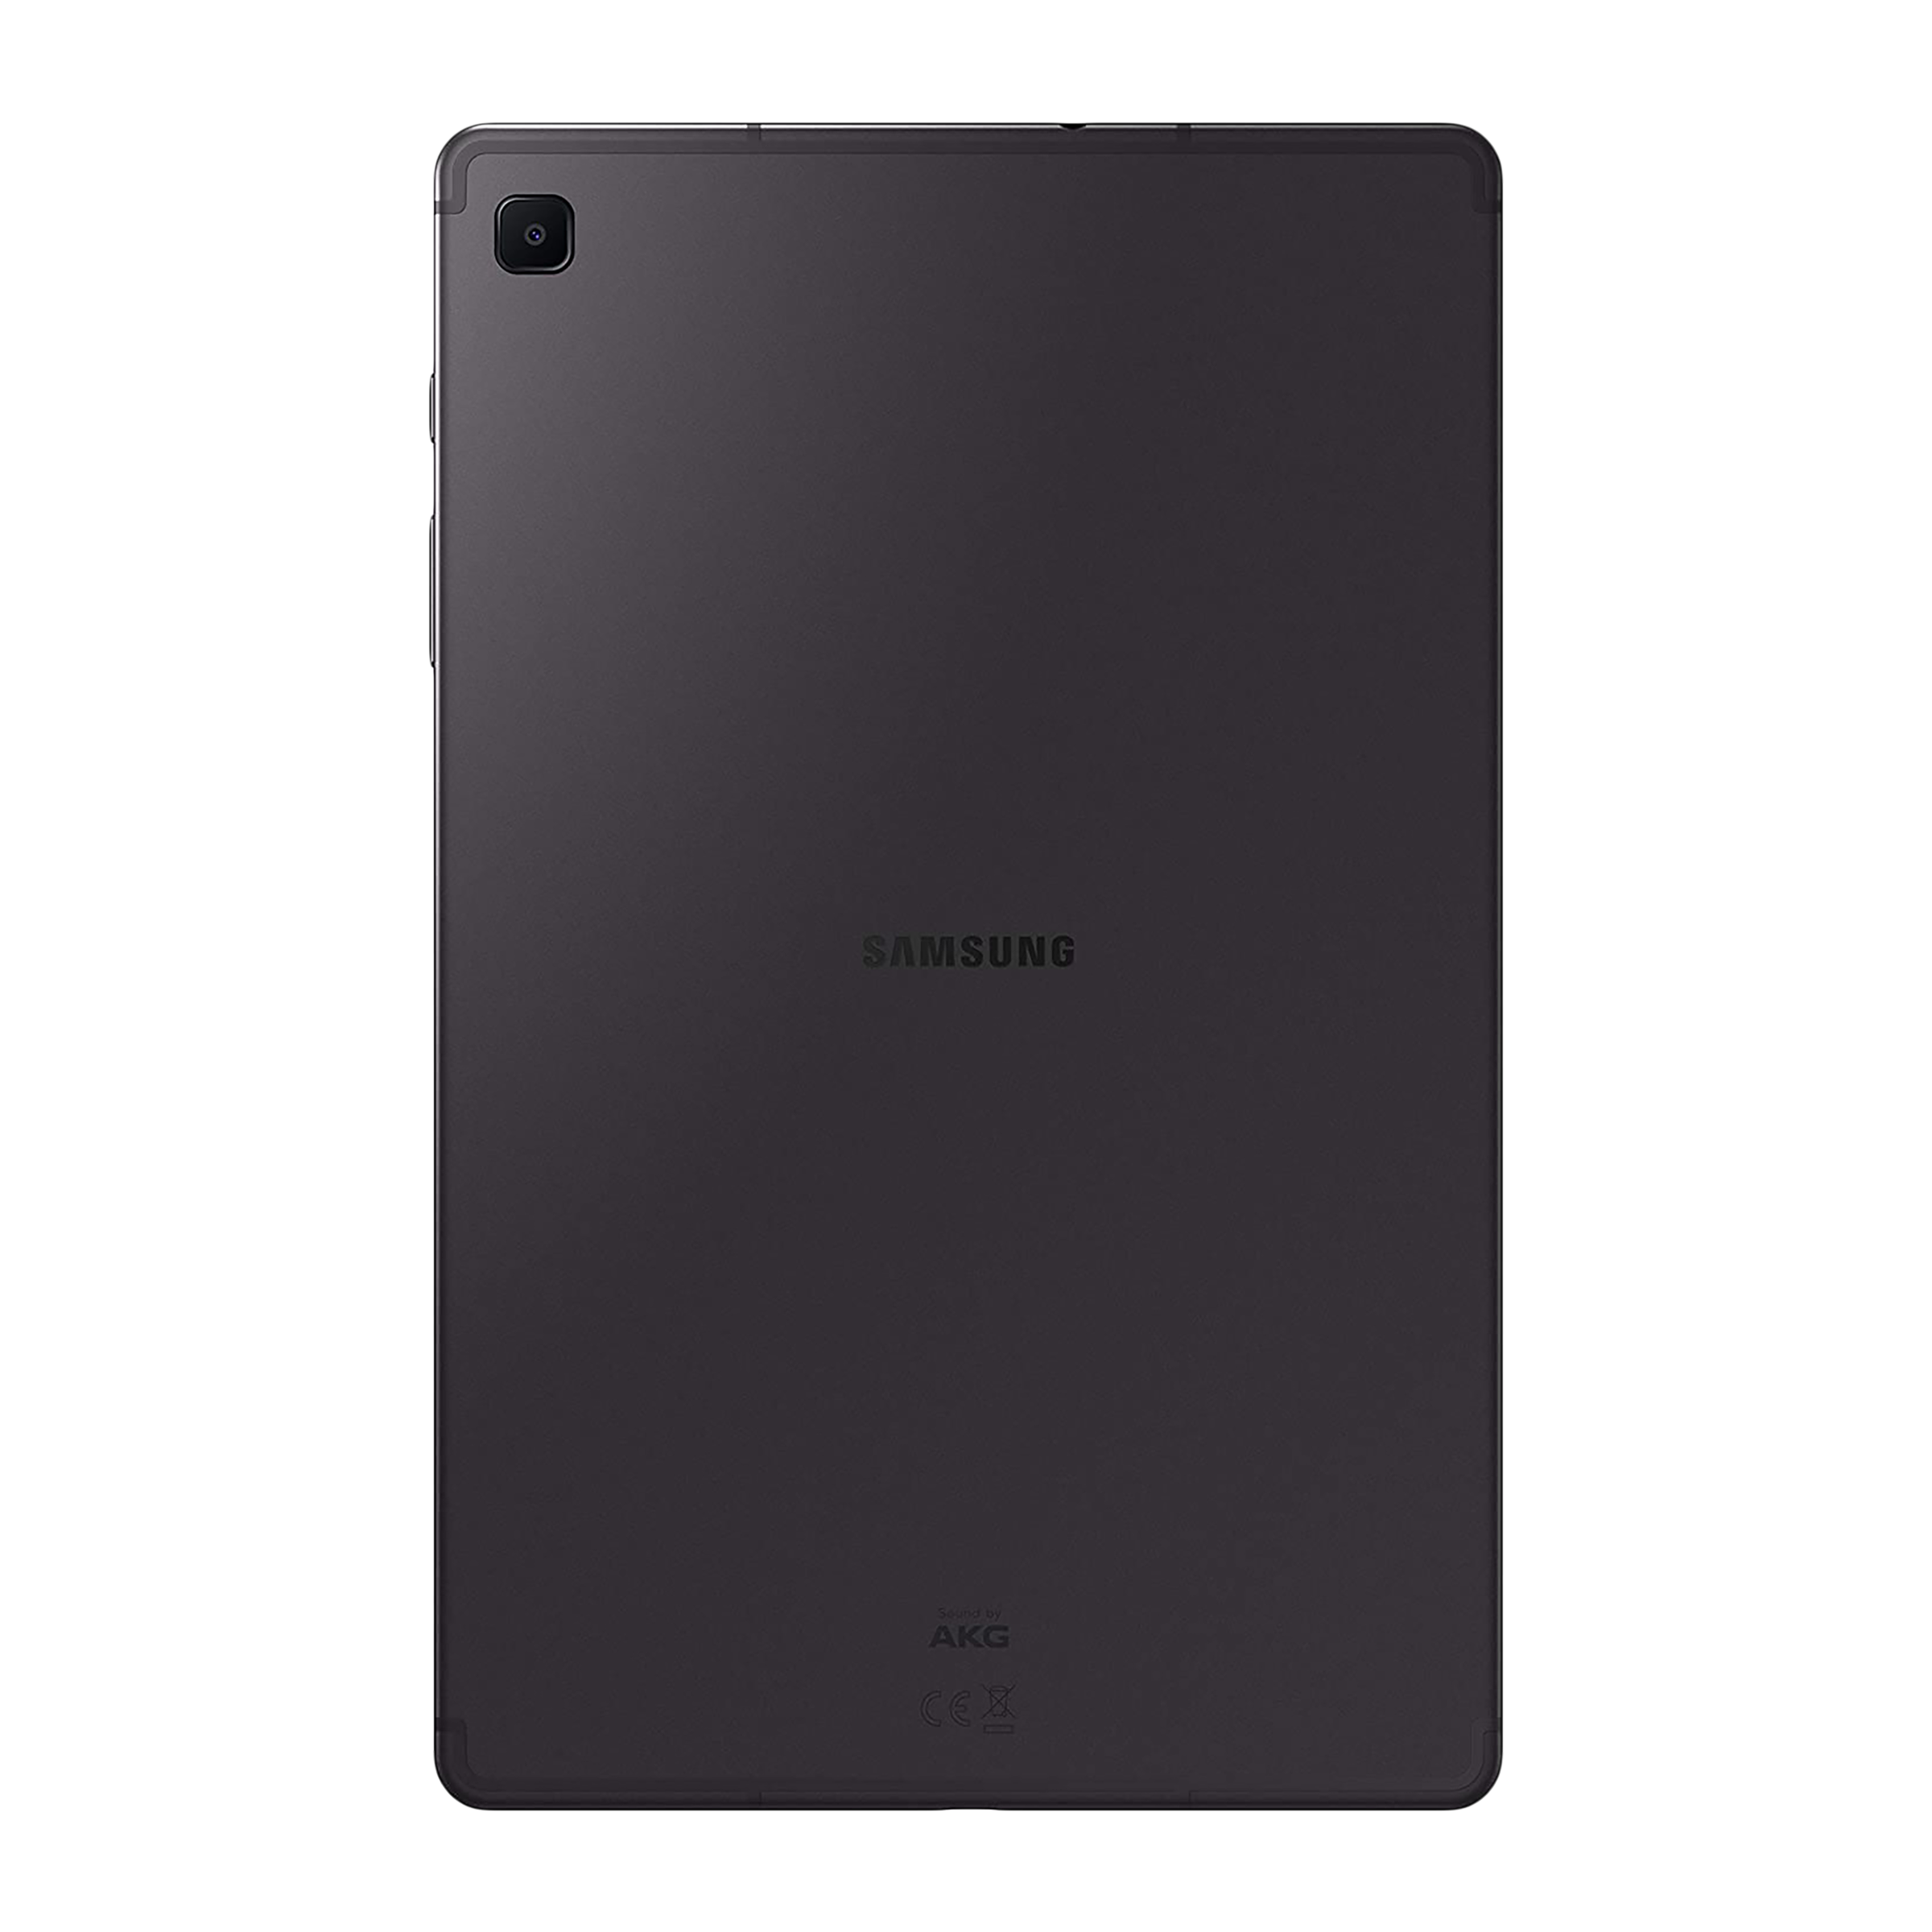 Buy SAMSUNG Galaxy Tab S6 Lite WiFi Android Tablet (10.4 Inch, 4GB RAM